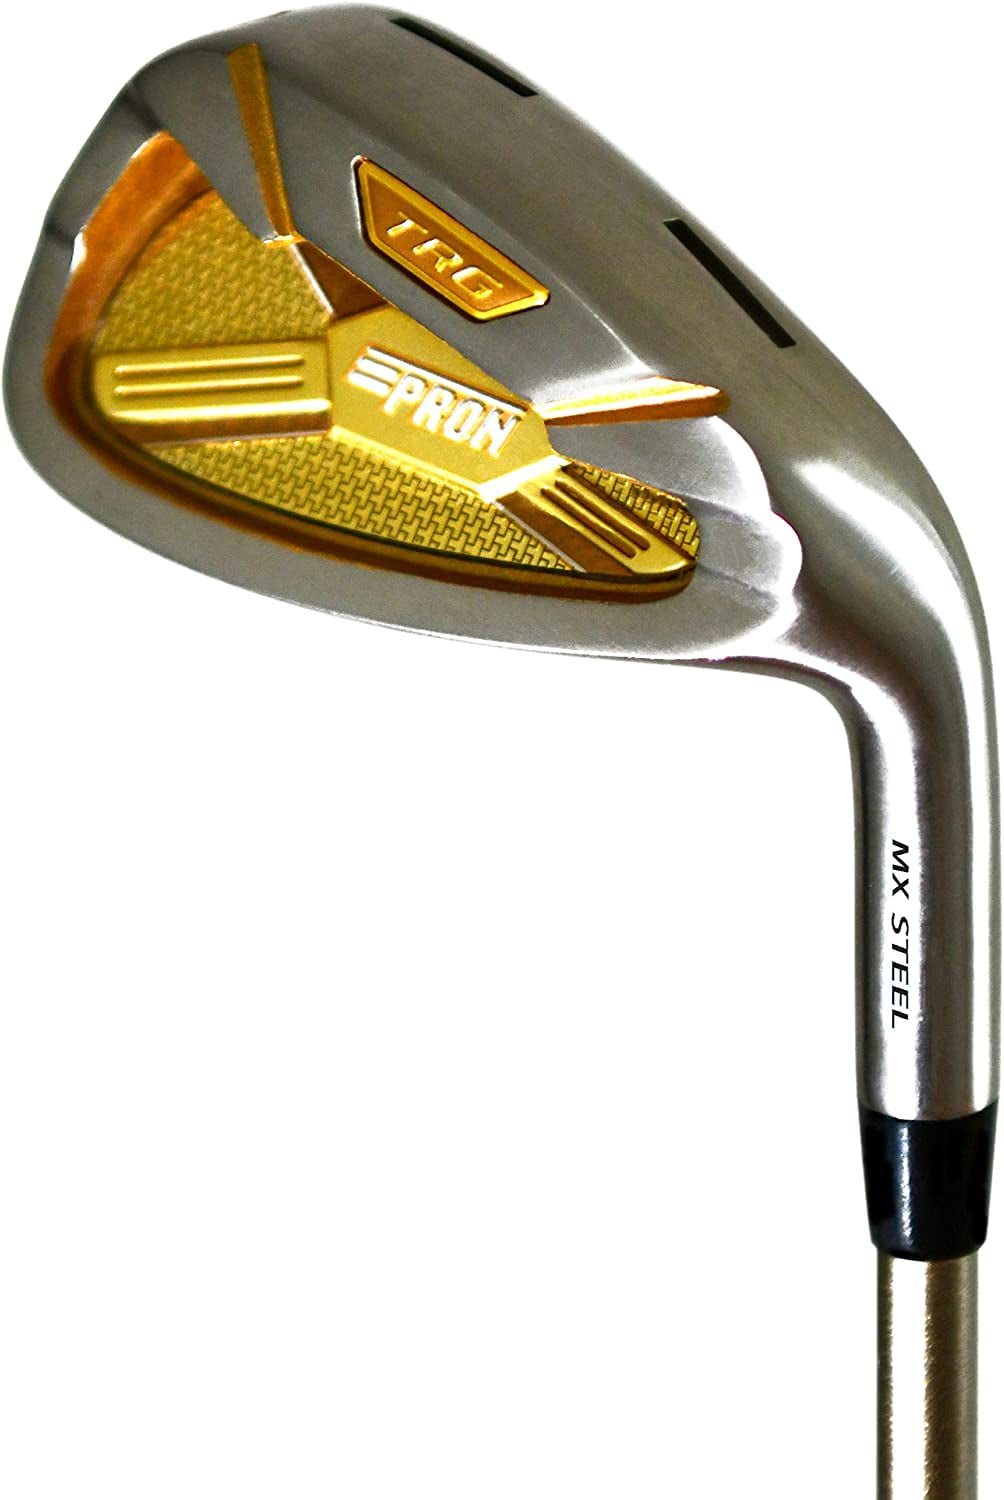 GIGA X PREMIUM stainless steel golf fairway wood club gold colour -  AliExpress